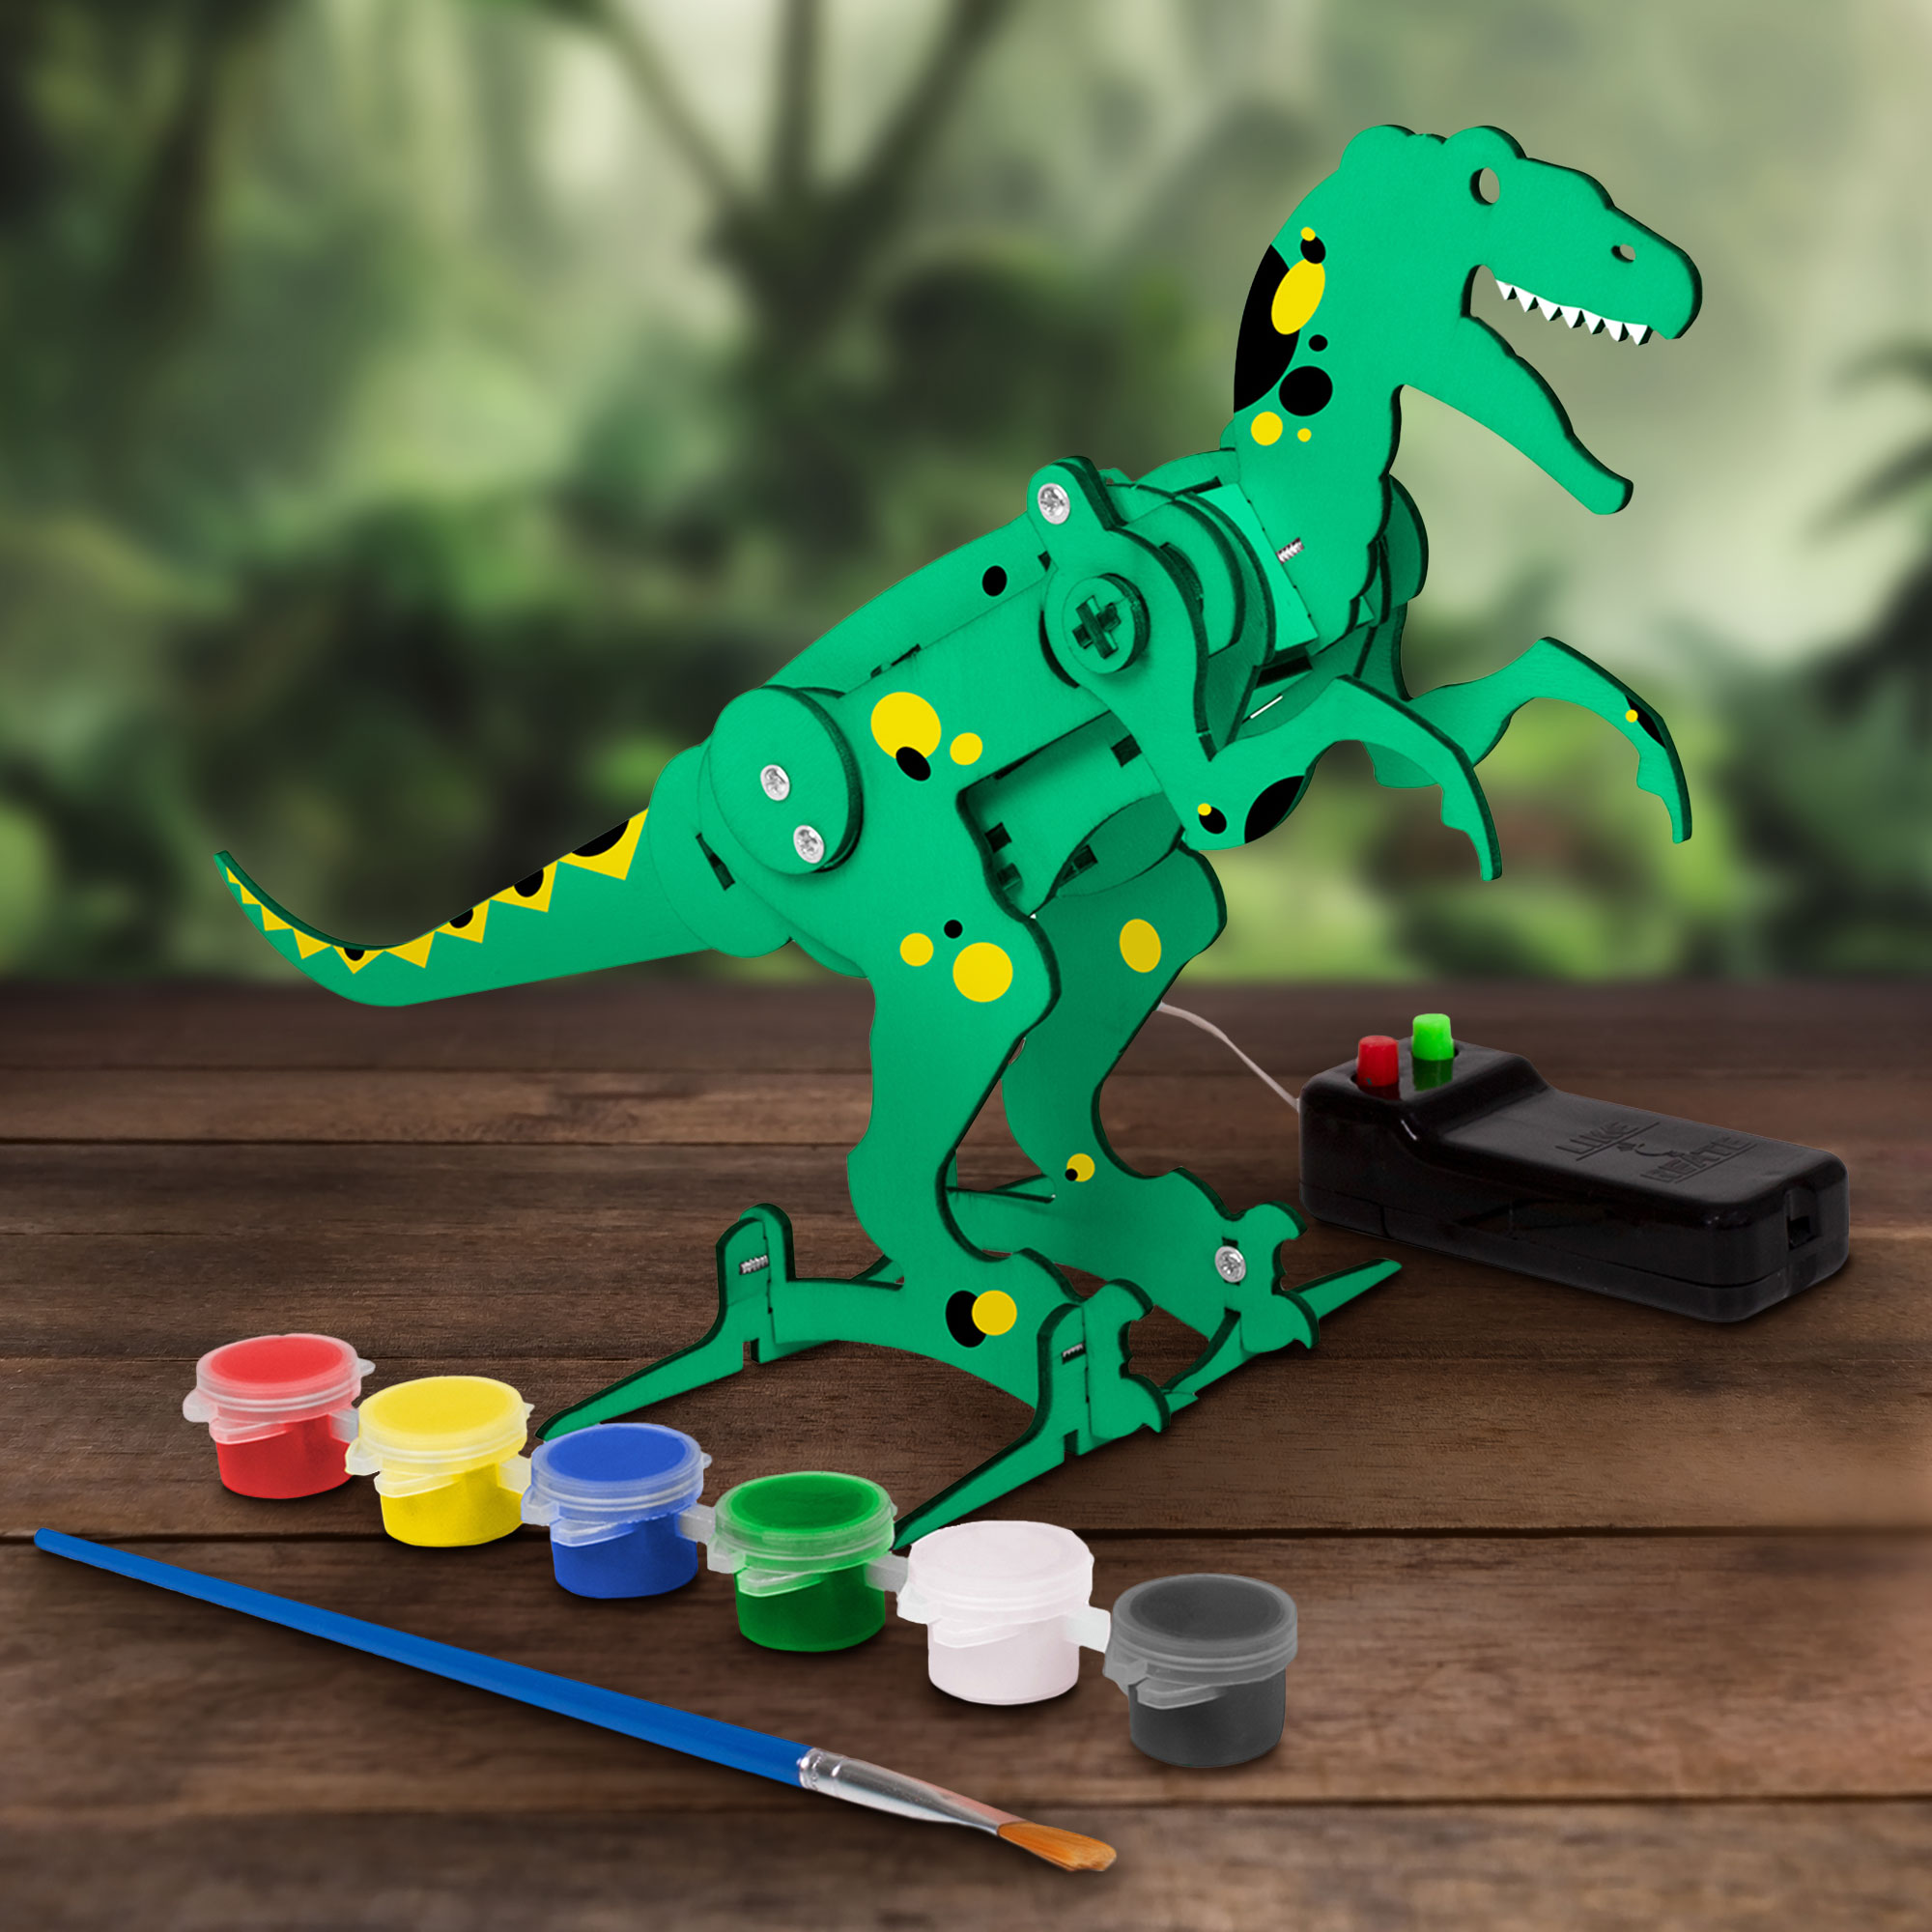 Ferngesteuerter Dinosaurier - Build your own